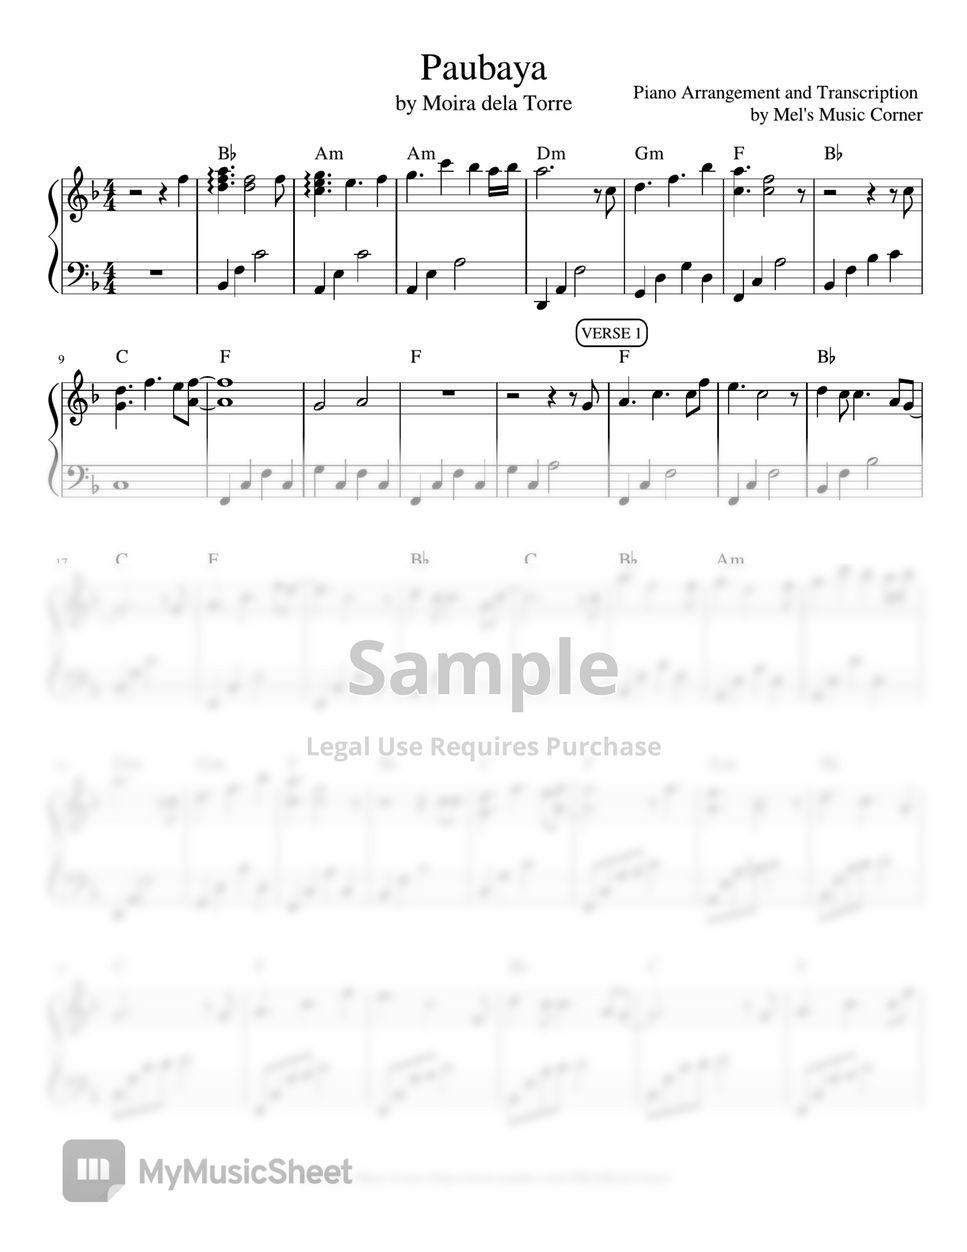 Moira - Paubaya (piano sheet music) by Mel's Music Corner